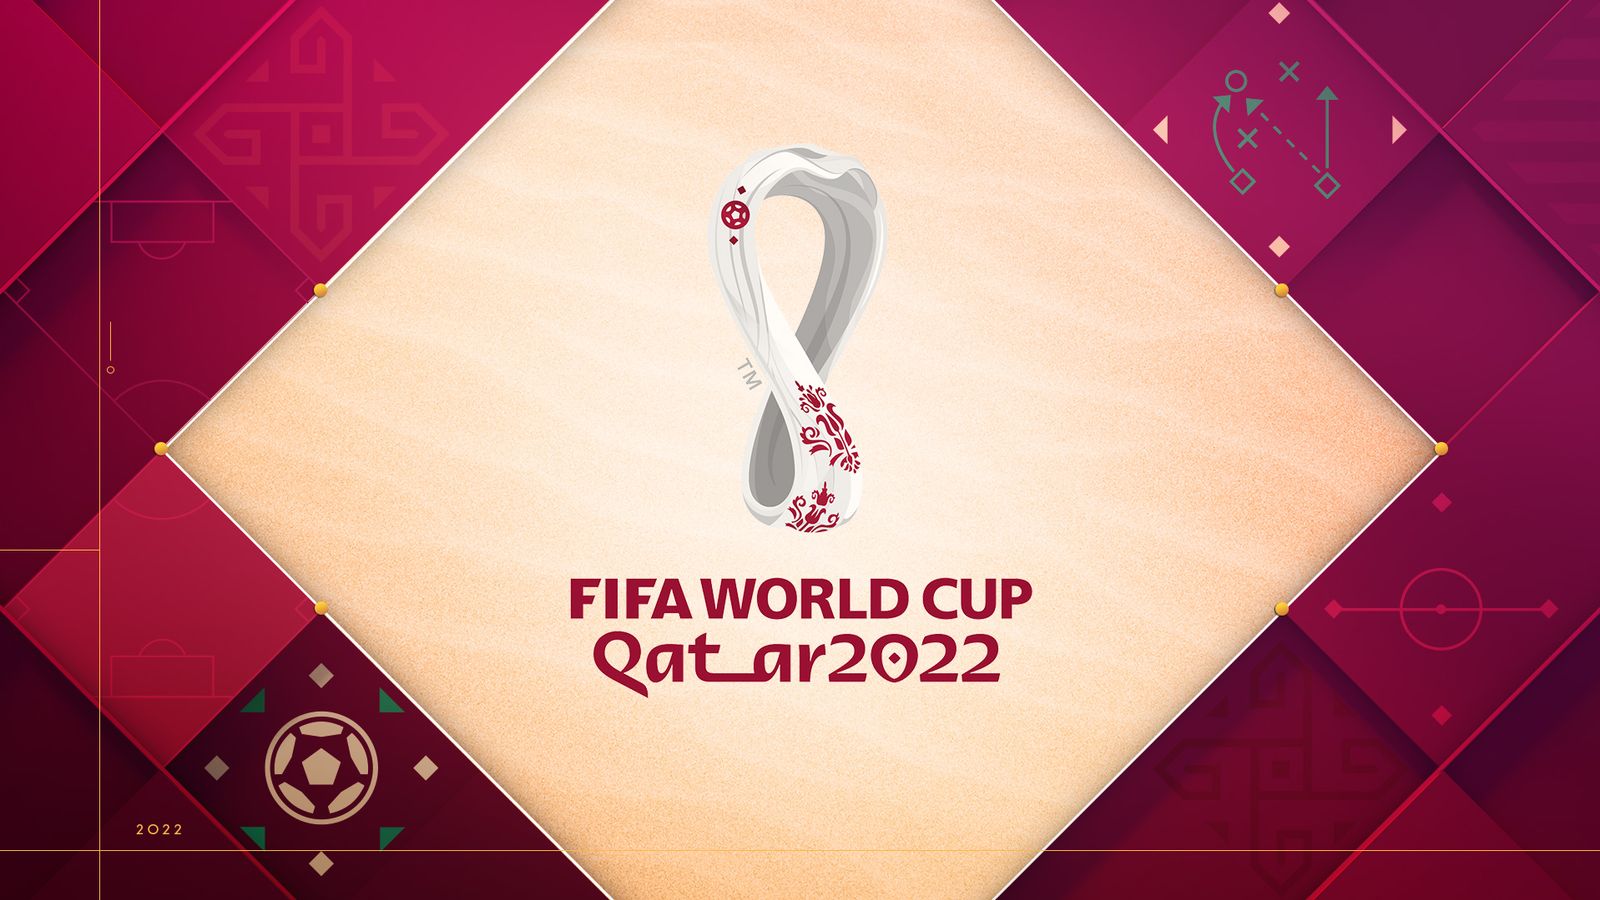 next match of fifa world cup